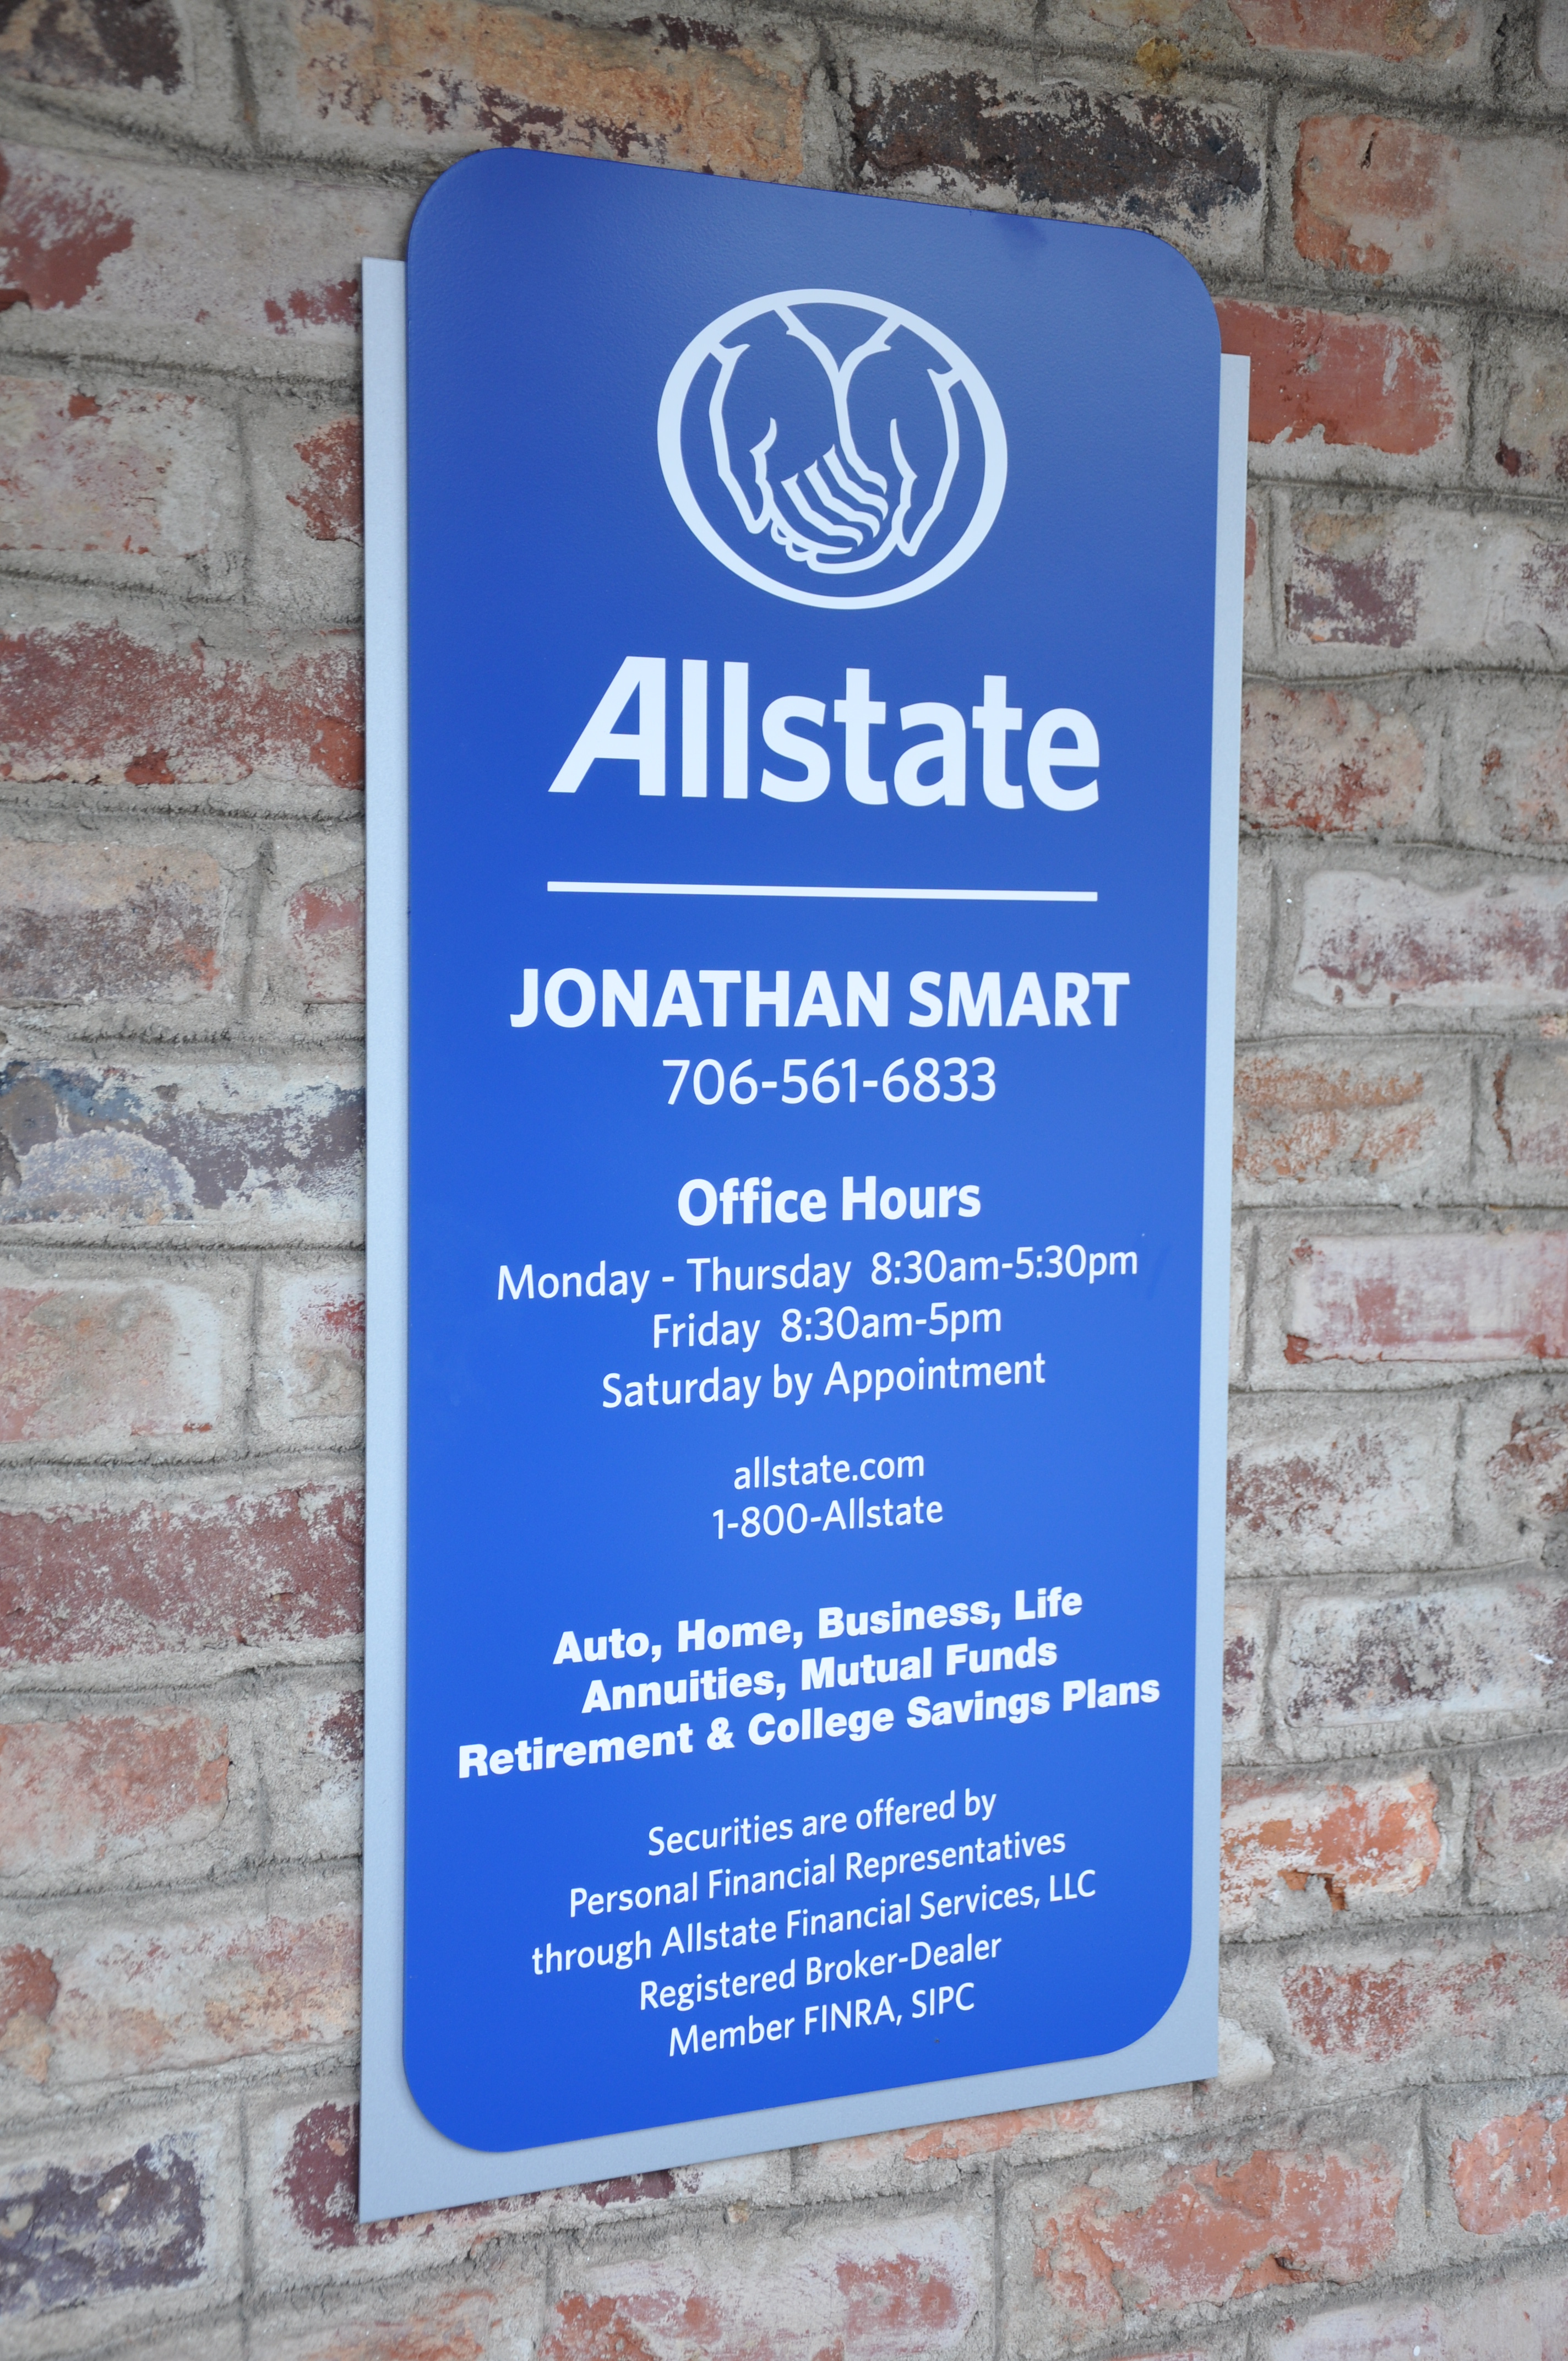 Jonathan Smart: Allstate Insurance Photo